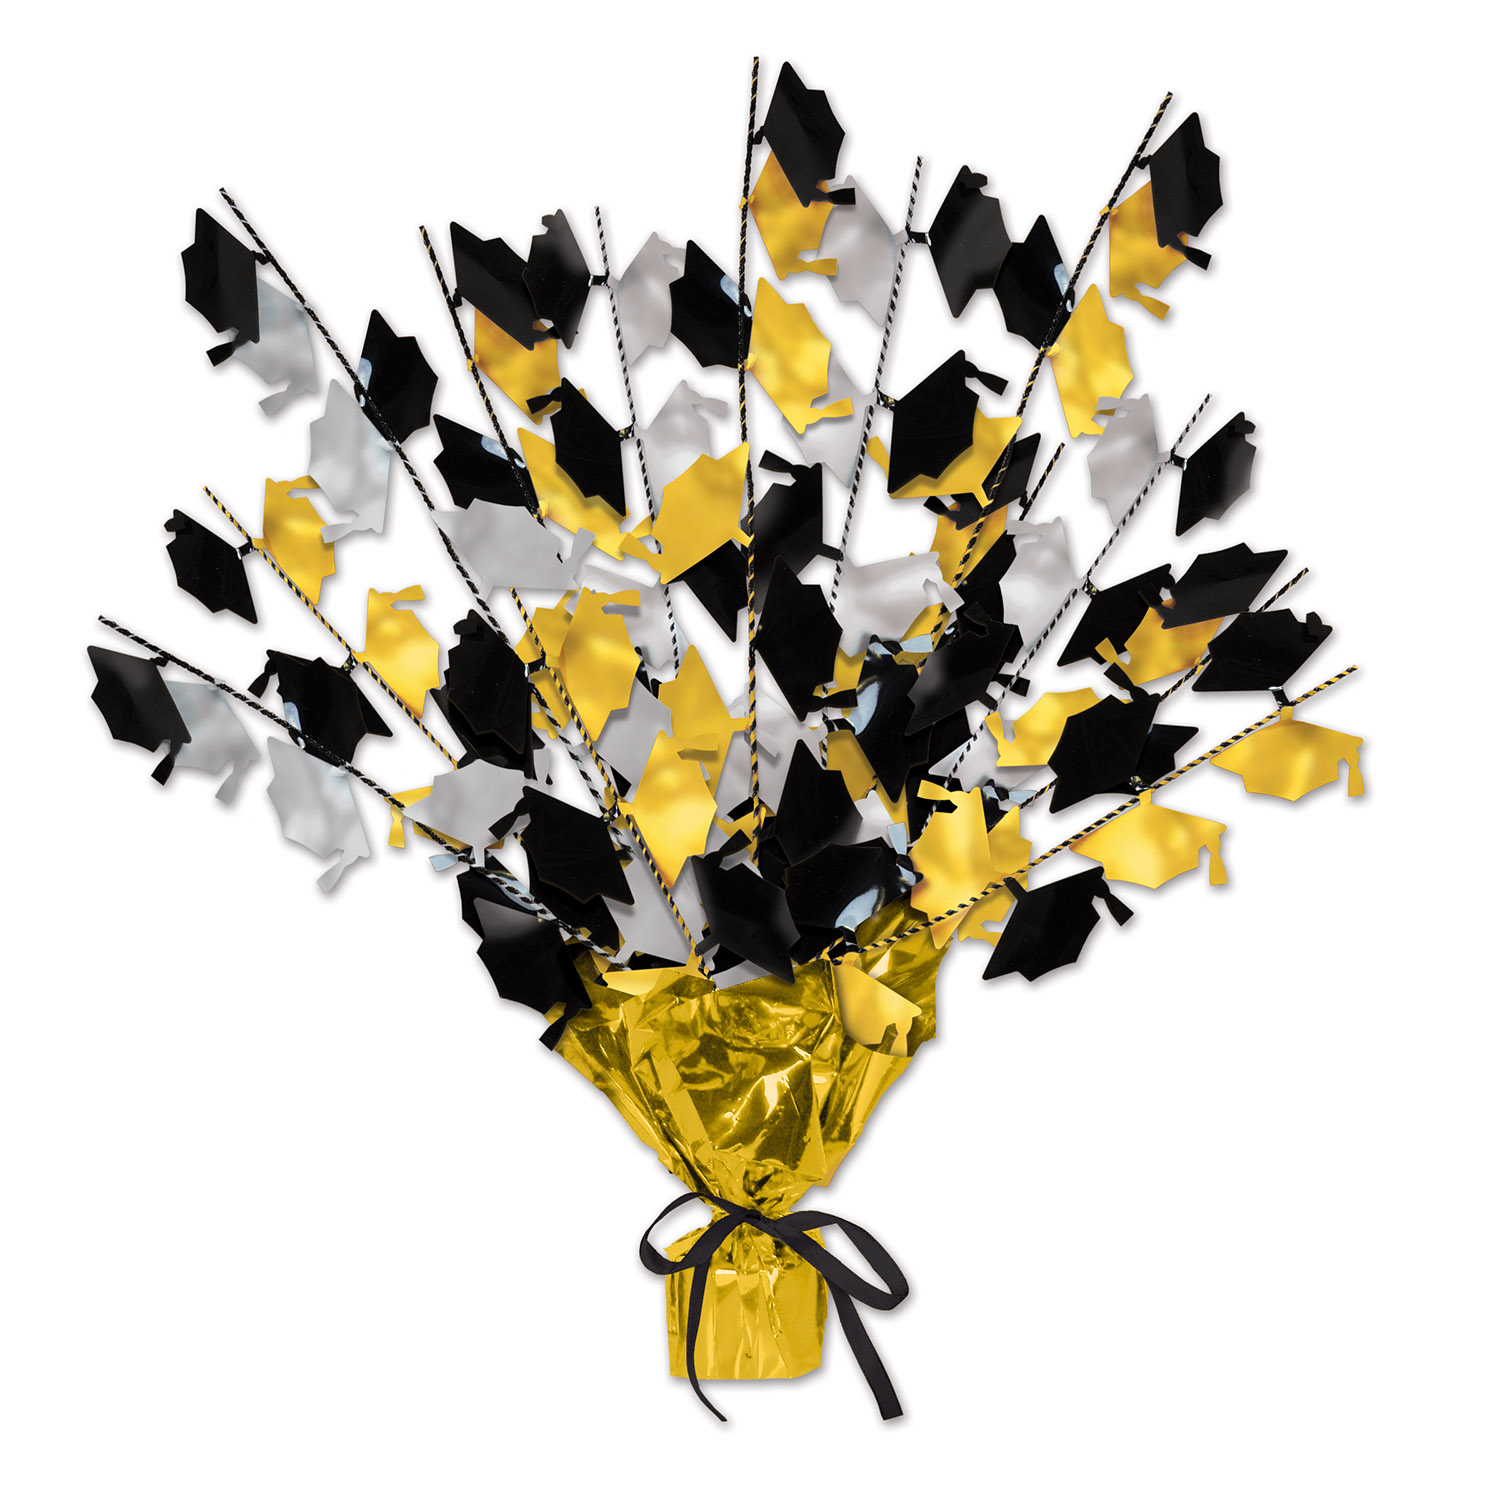 12 Wholesale Graduate Cap Gleam 'n Burst Centerpiece Black, Gold, Silver